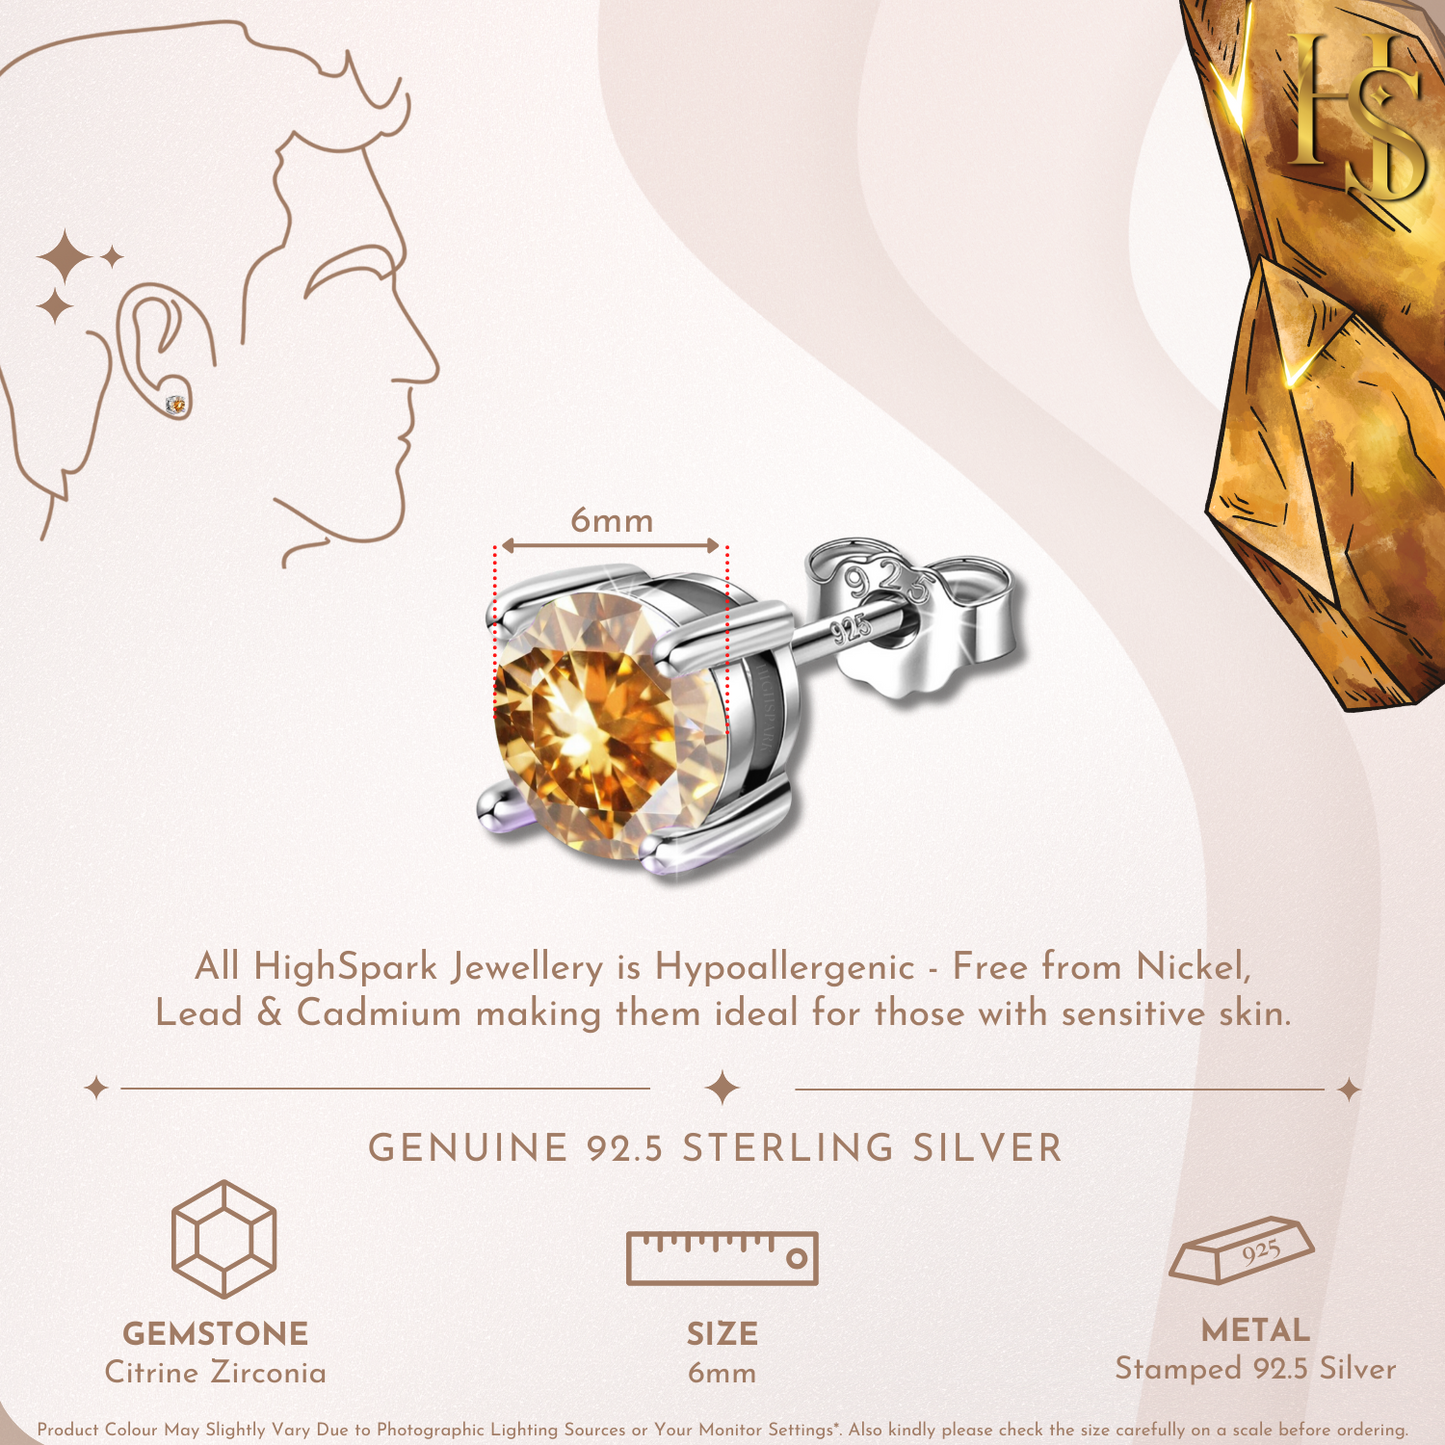 Men's Solitaire Stud Earring - 925 Silver - Birthstone November Citrine Zirconia - 1 Piece